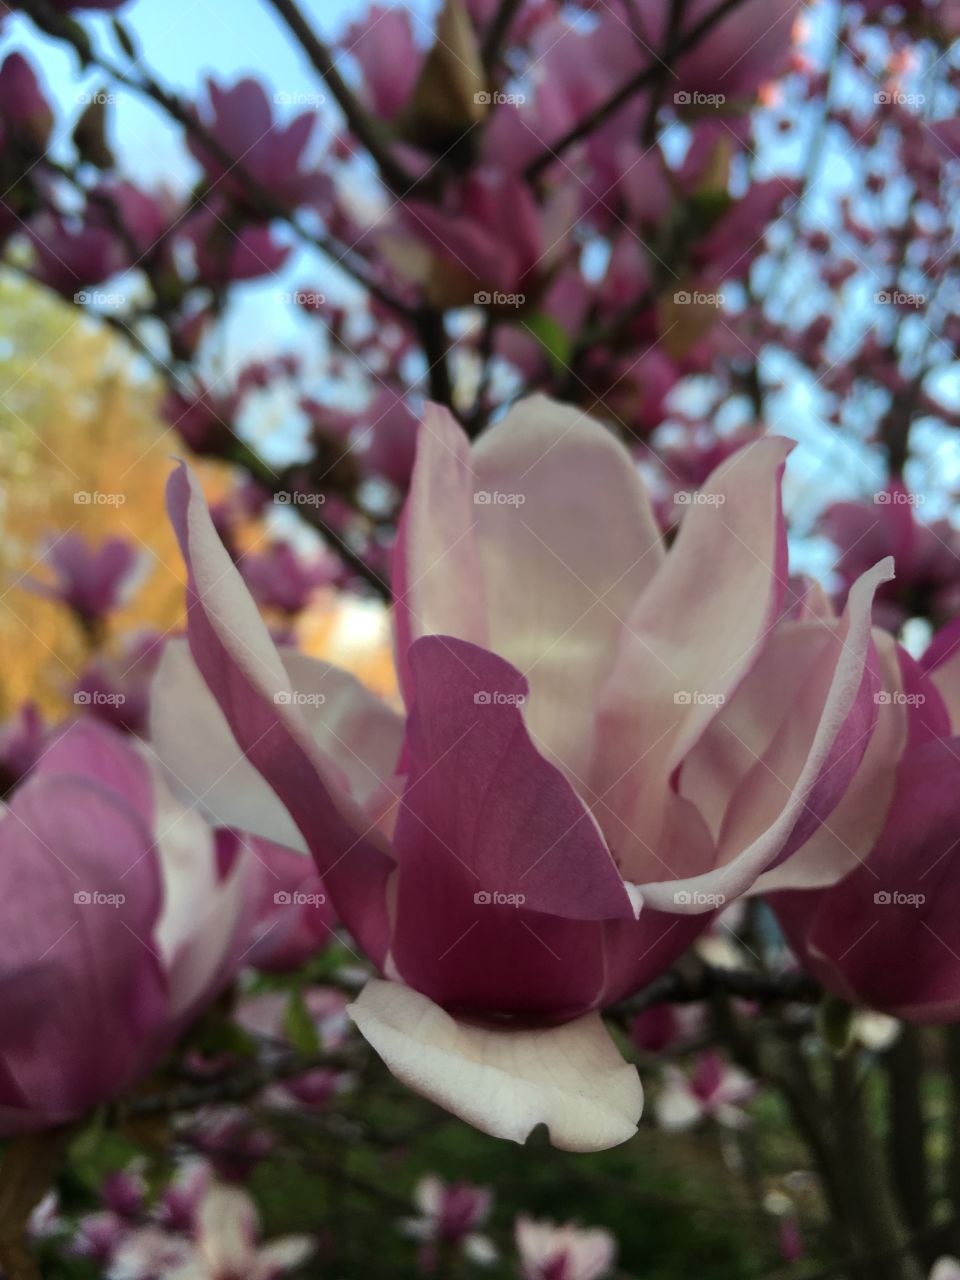 Tulip tree bright, lavender shades and white